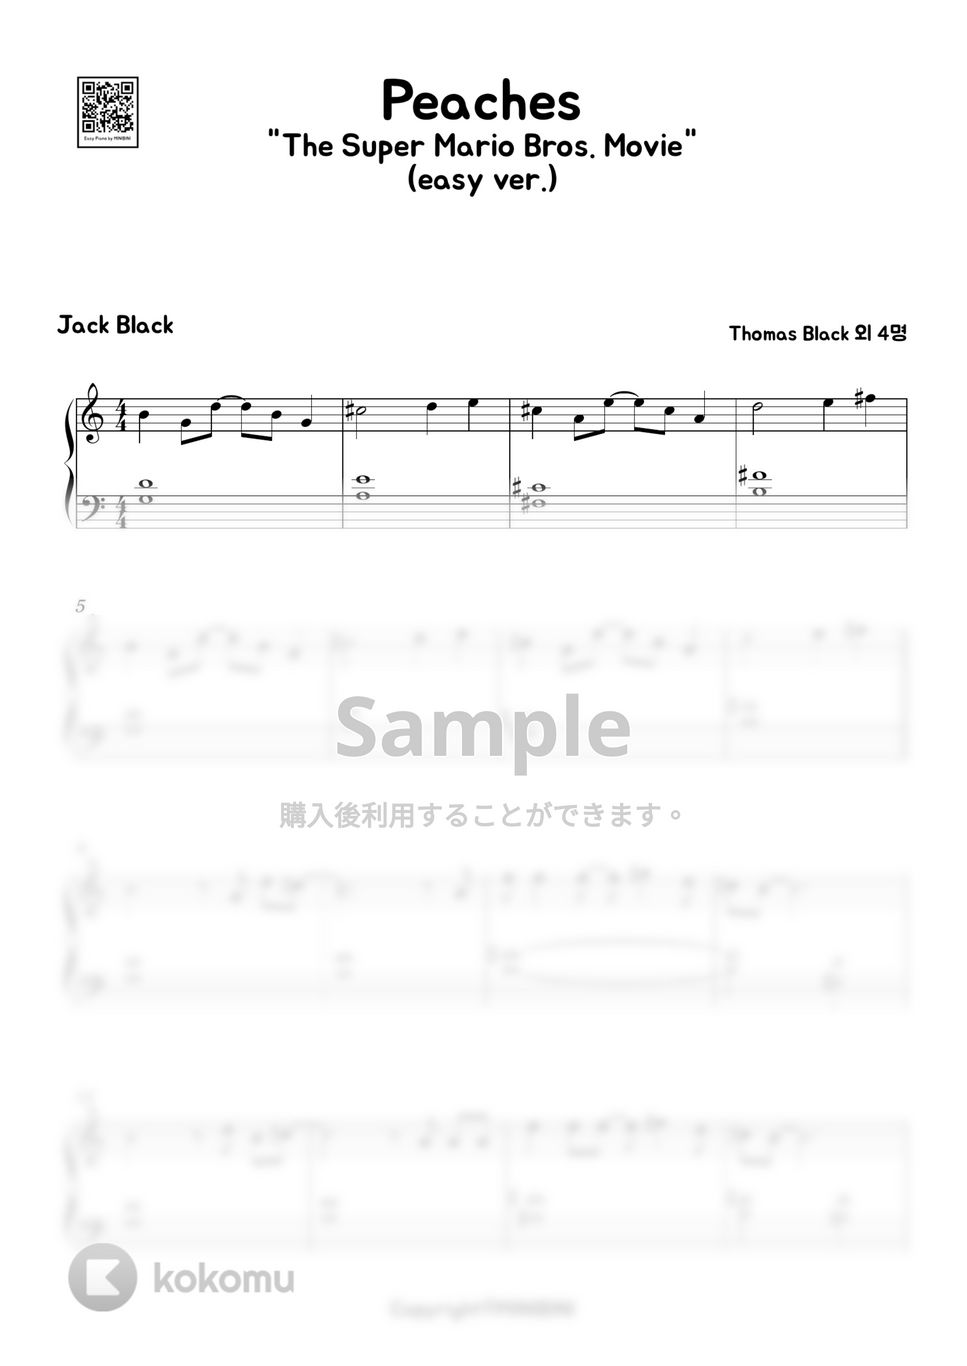 Jack Black - Peaches(Easy Ver.) (スーパーマリオブラザーズ) by MINIBINI